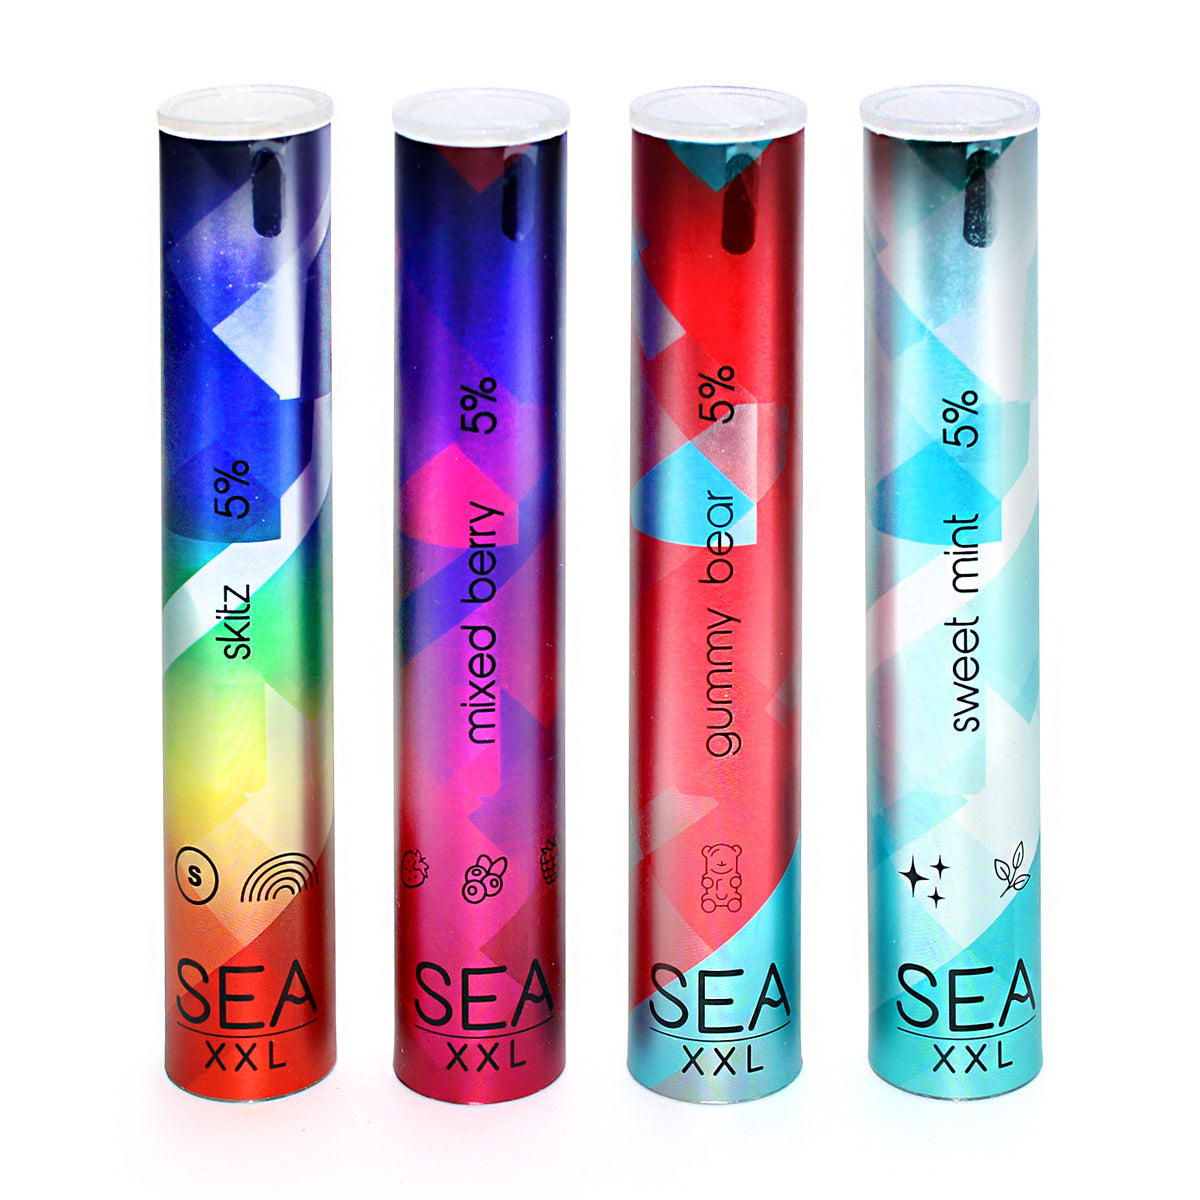 Sea XXL Vape Flavors